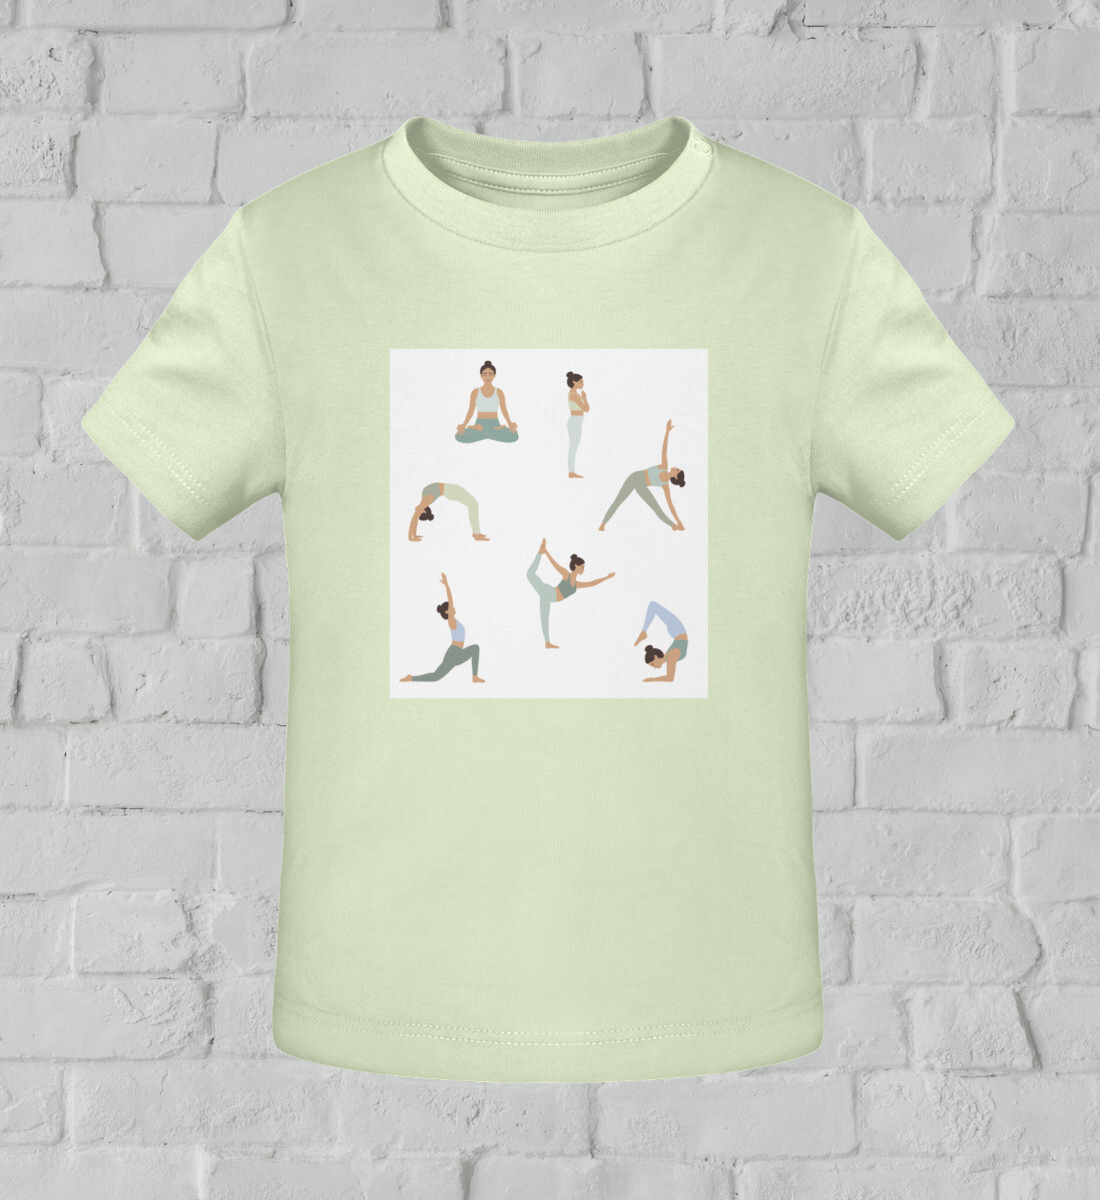 asanas l yoga shirt kinder hellgrün l yoga kleidung kinder l mode für kinder l nachhaltige kinder kleidung